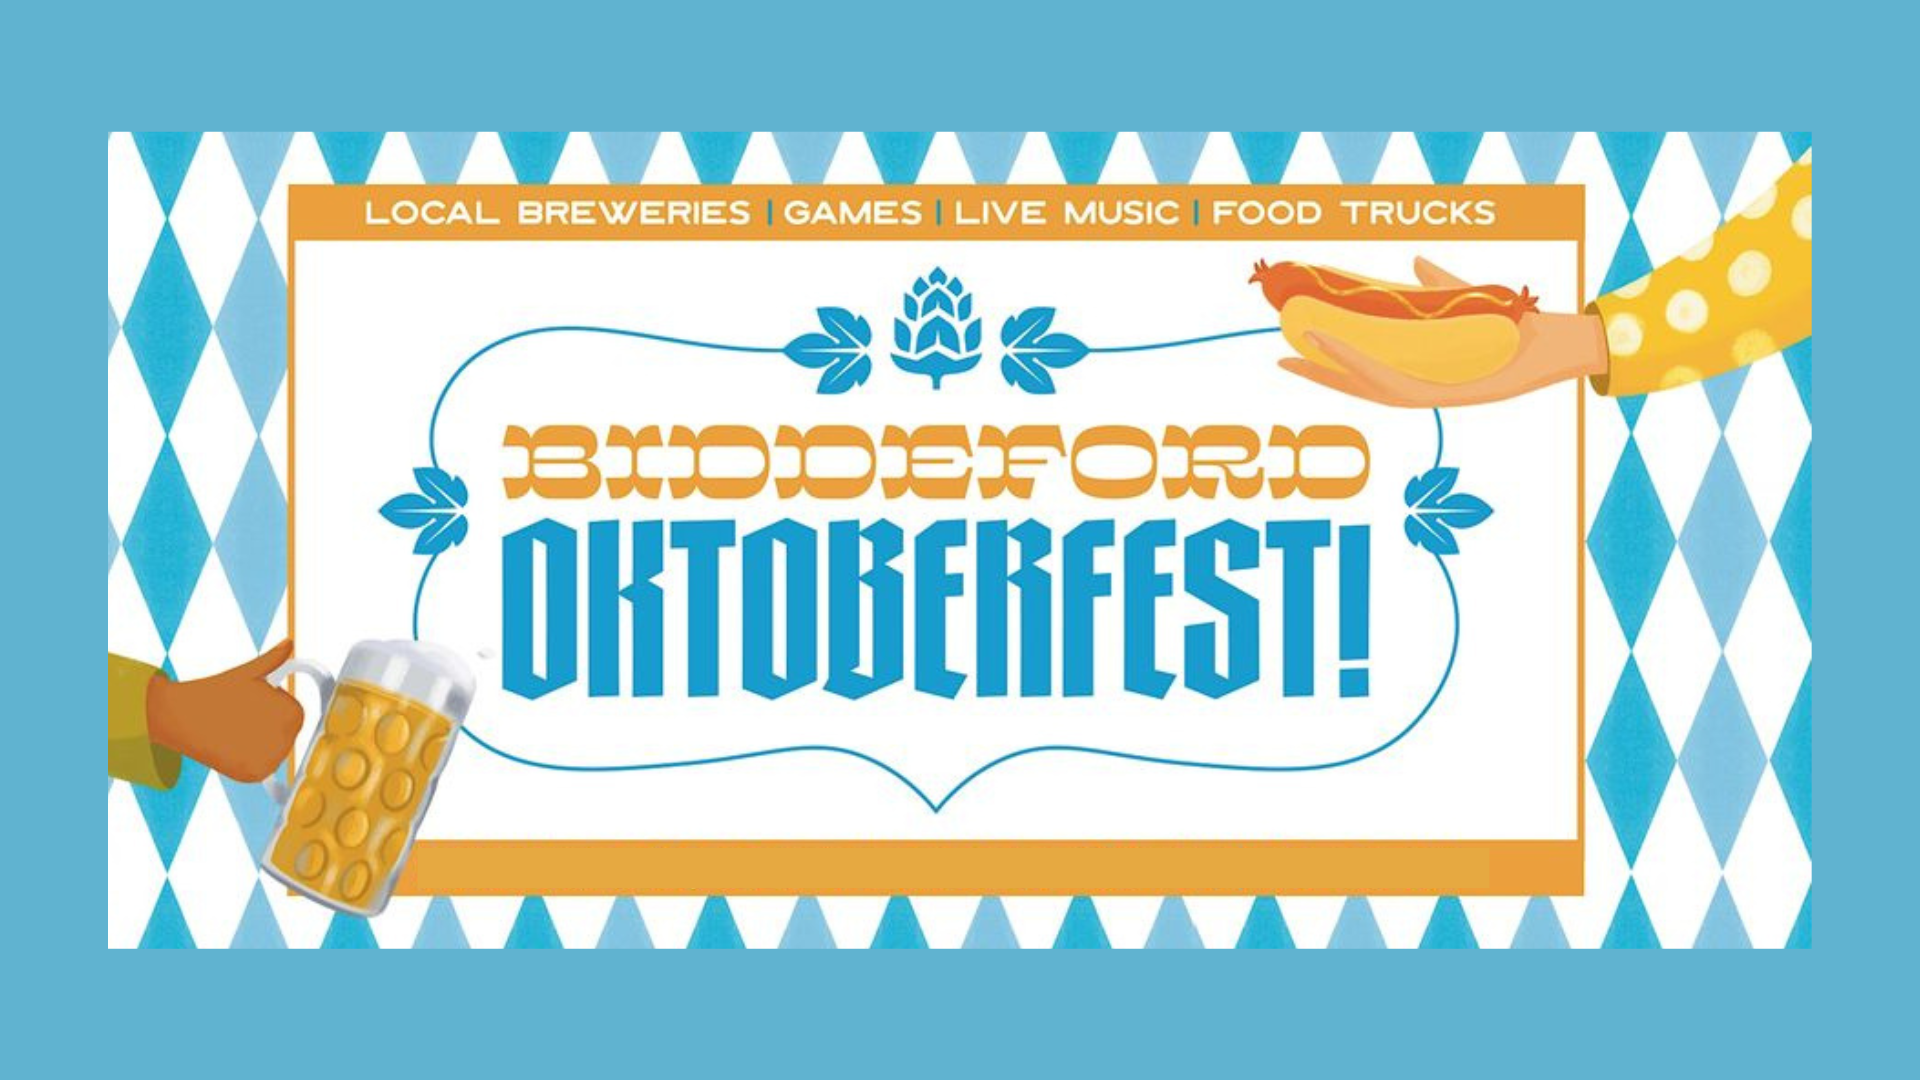 Biddeford Oktoberfest - Heart of Biddeford